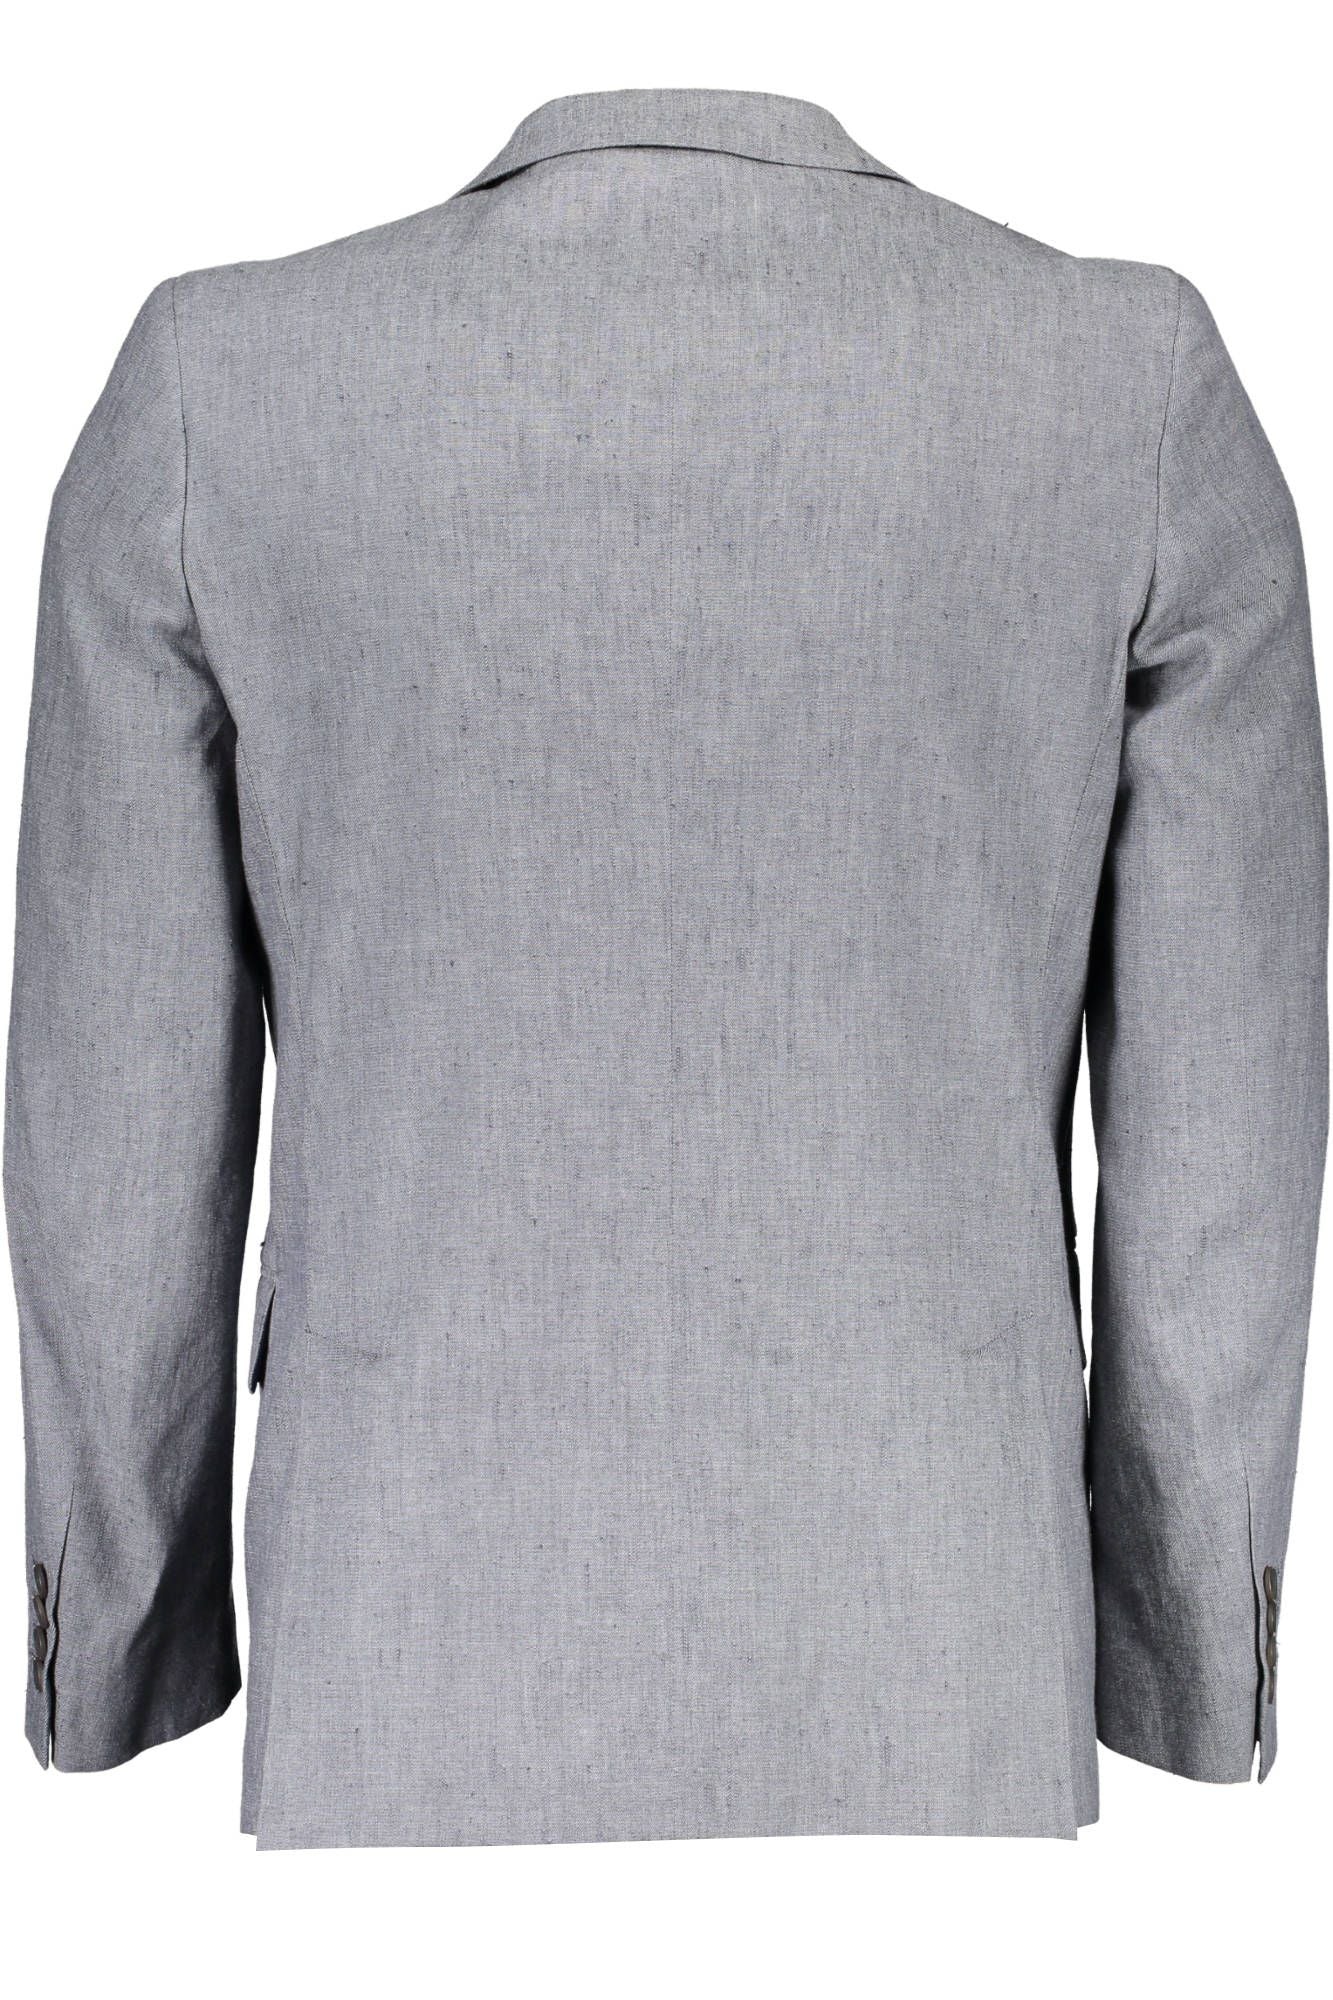 Elegant Gray Linen-Cotton Blend Jacket